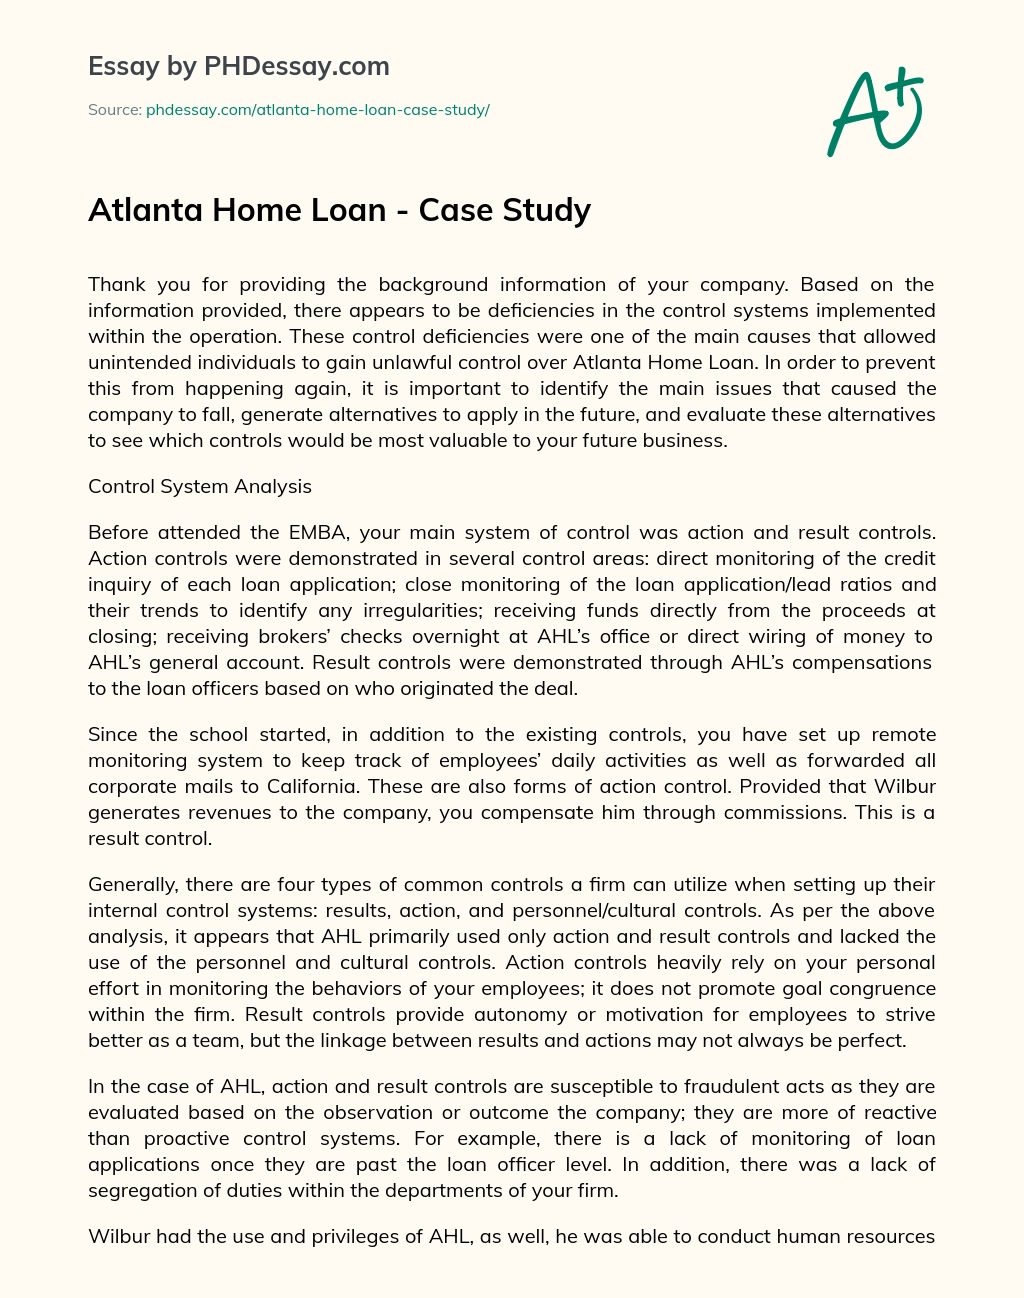 Atlanta Home Loan – Case Study essay